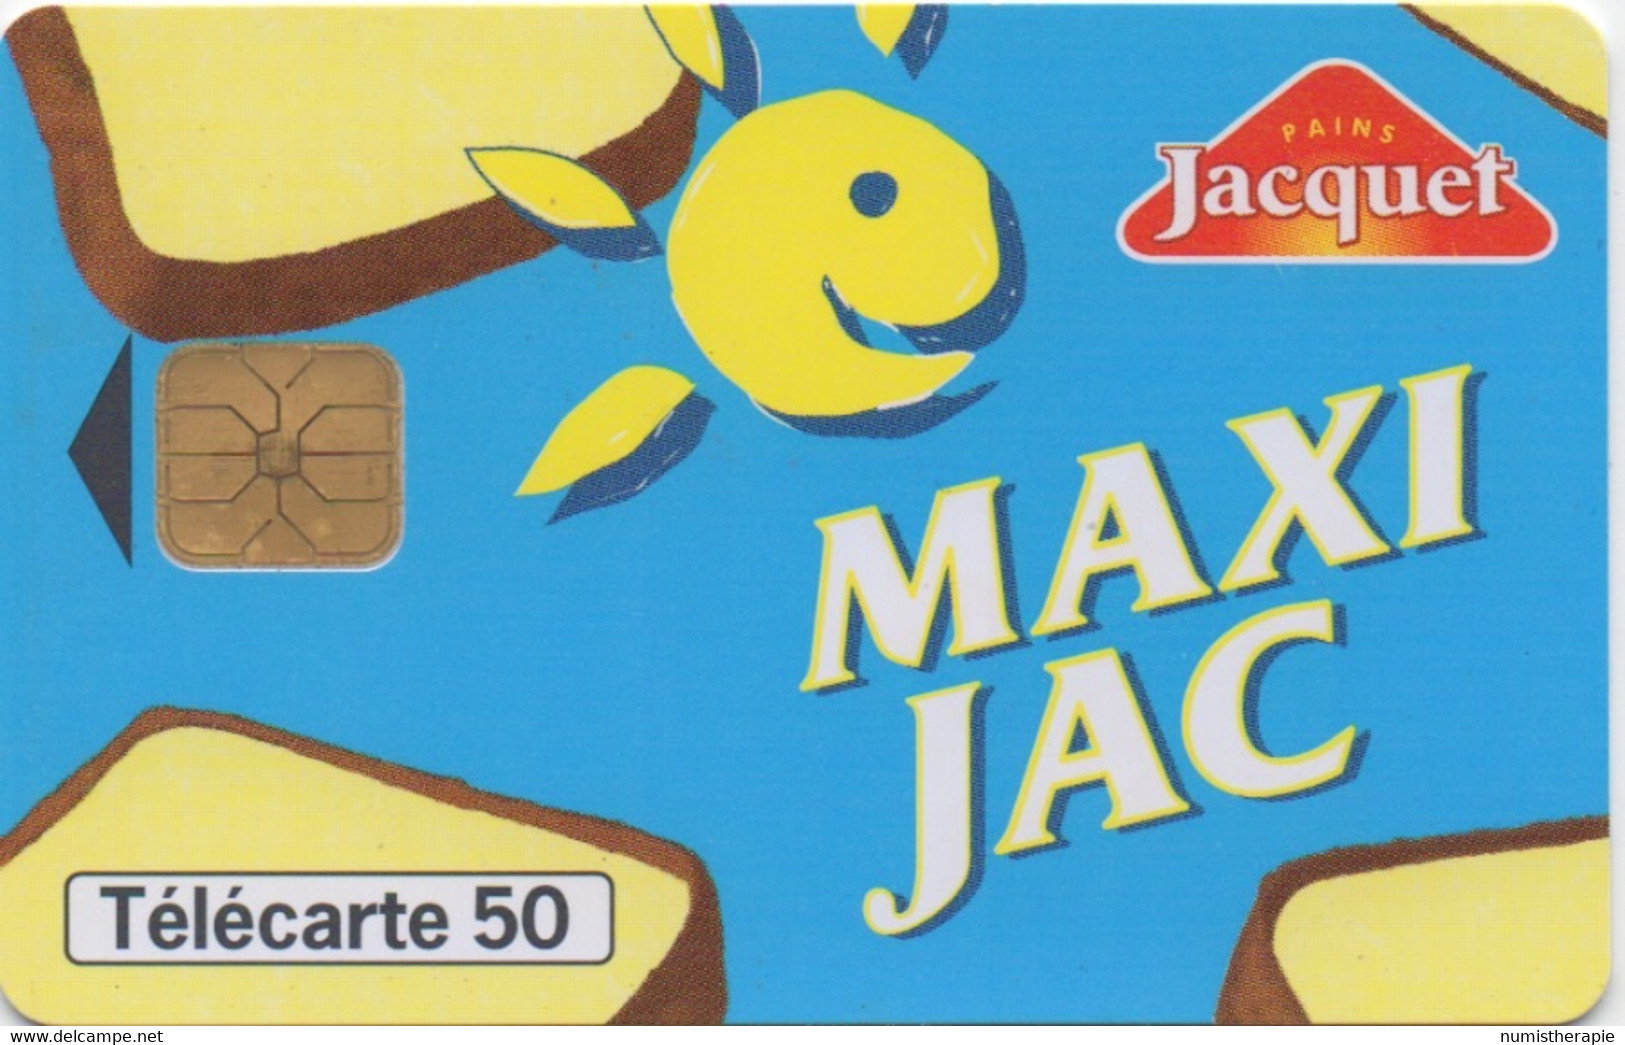 Pains Jacquet Maxi Jac 1999 - Lebensmittel